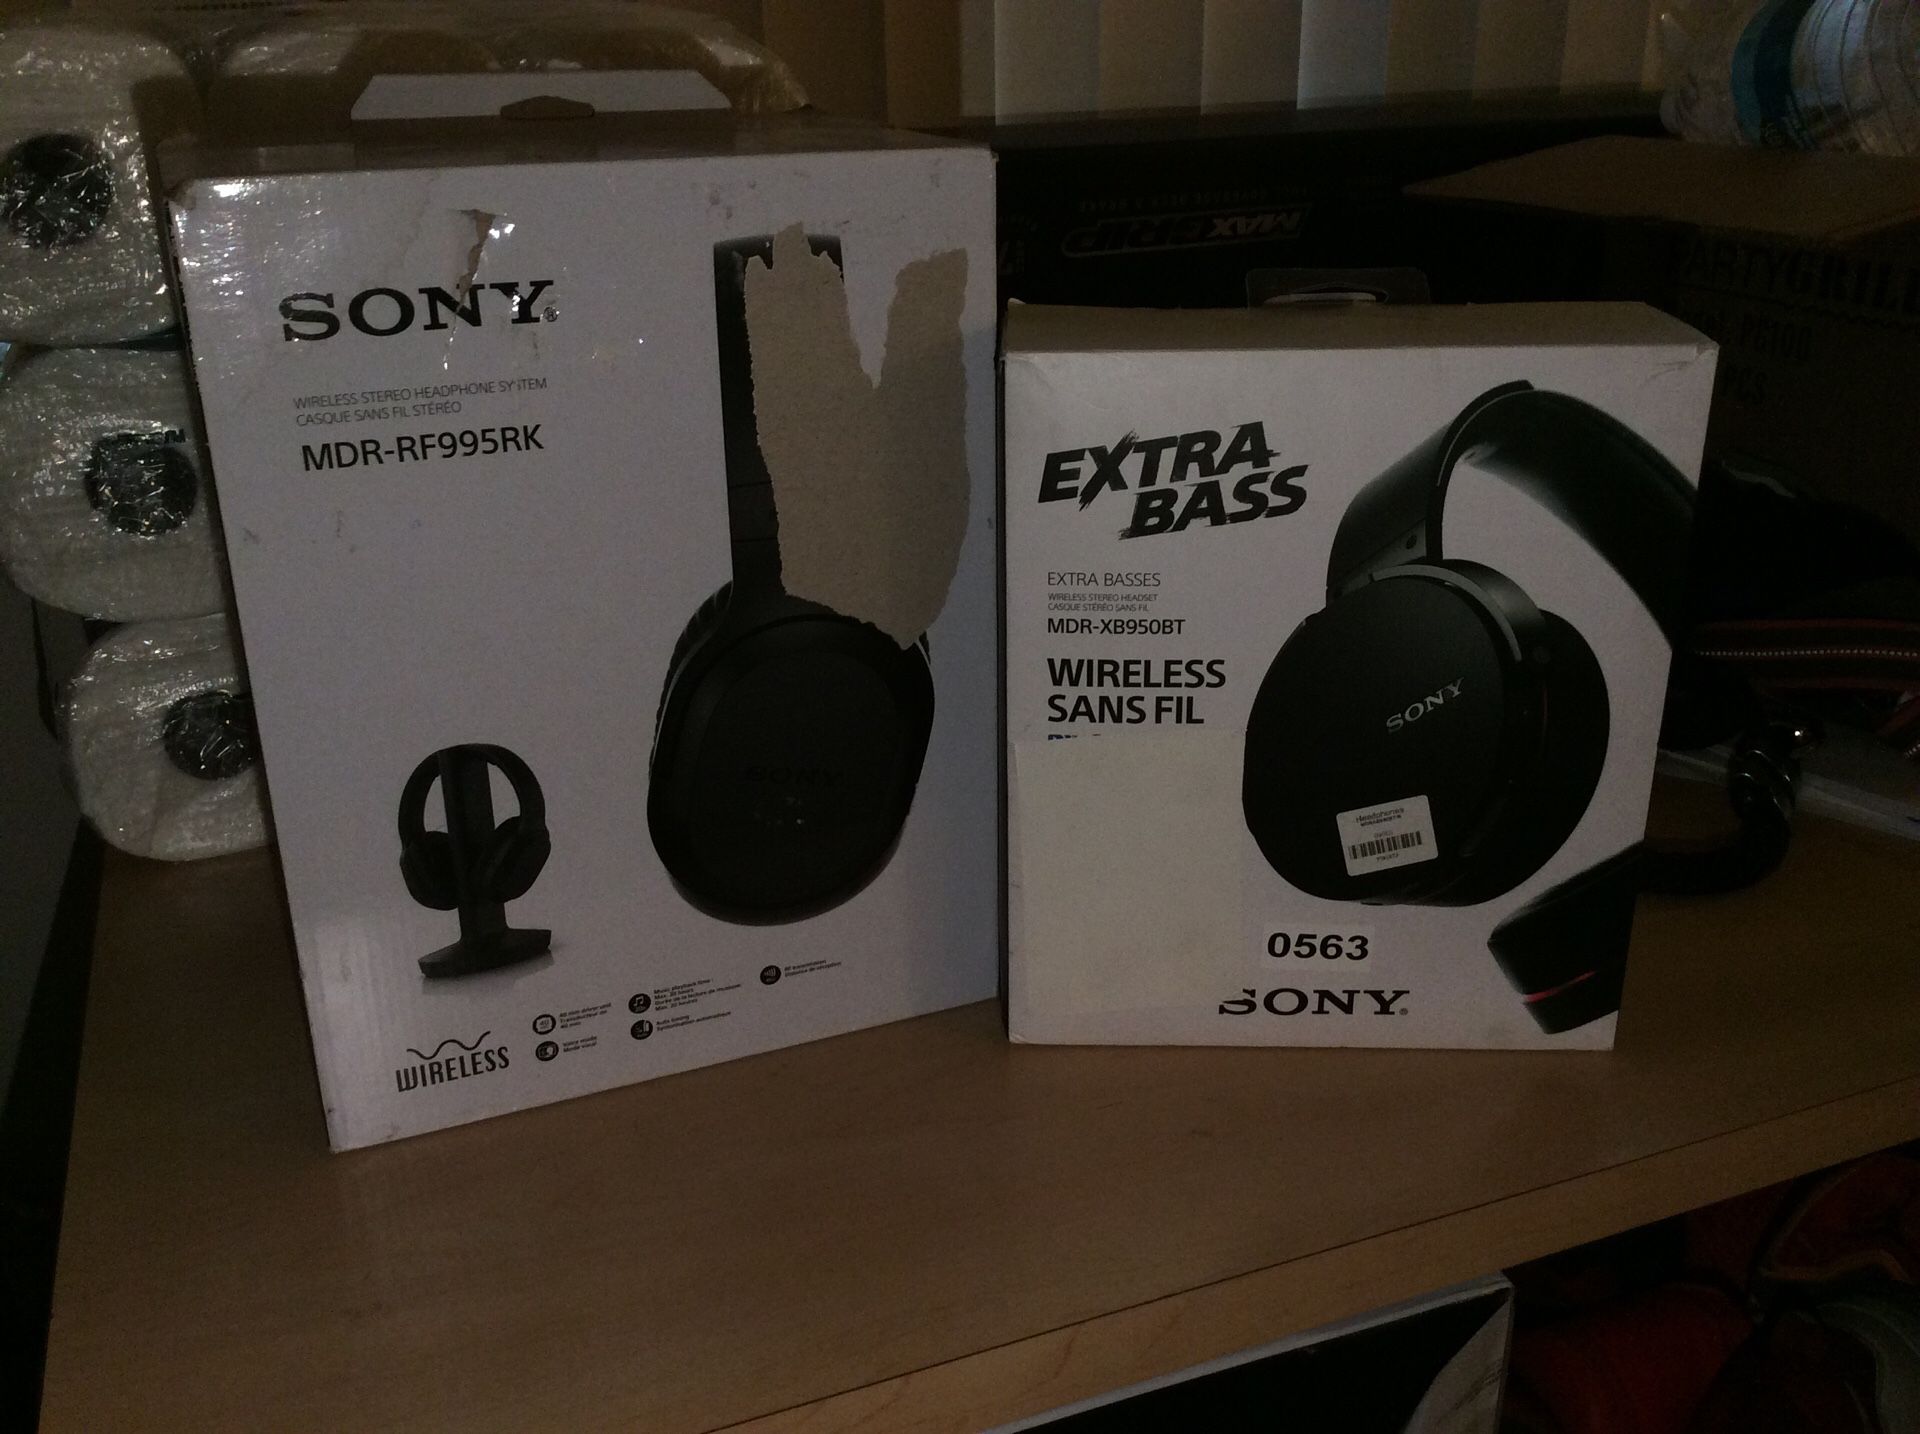 Sony Wireless Headphones Home Wireless stereo system and Sony Extra Bass Bluetooth headphones